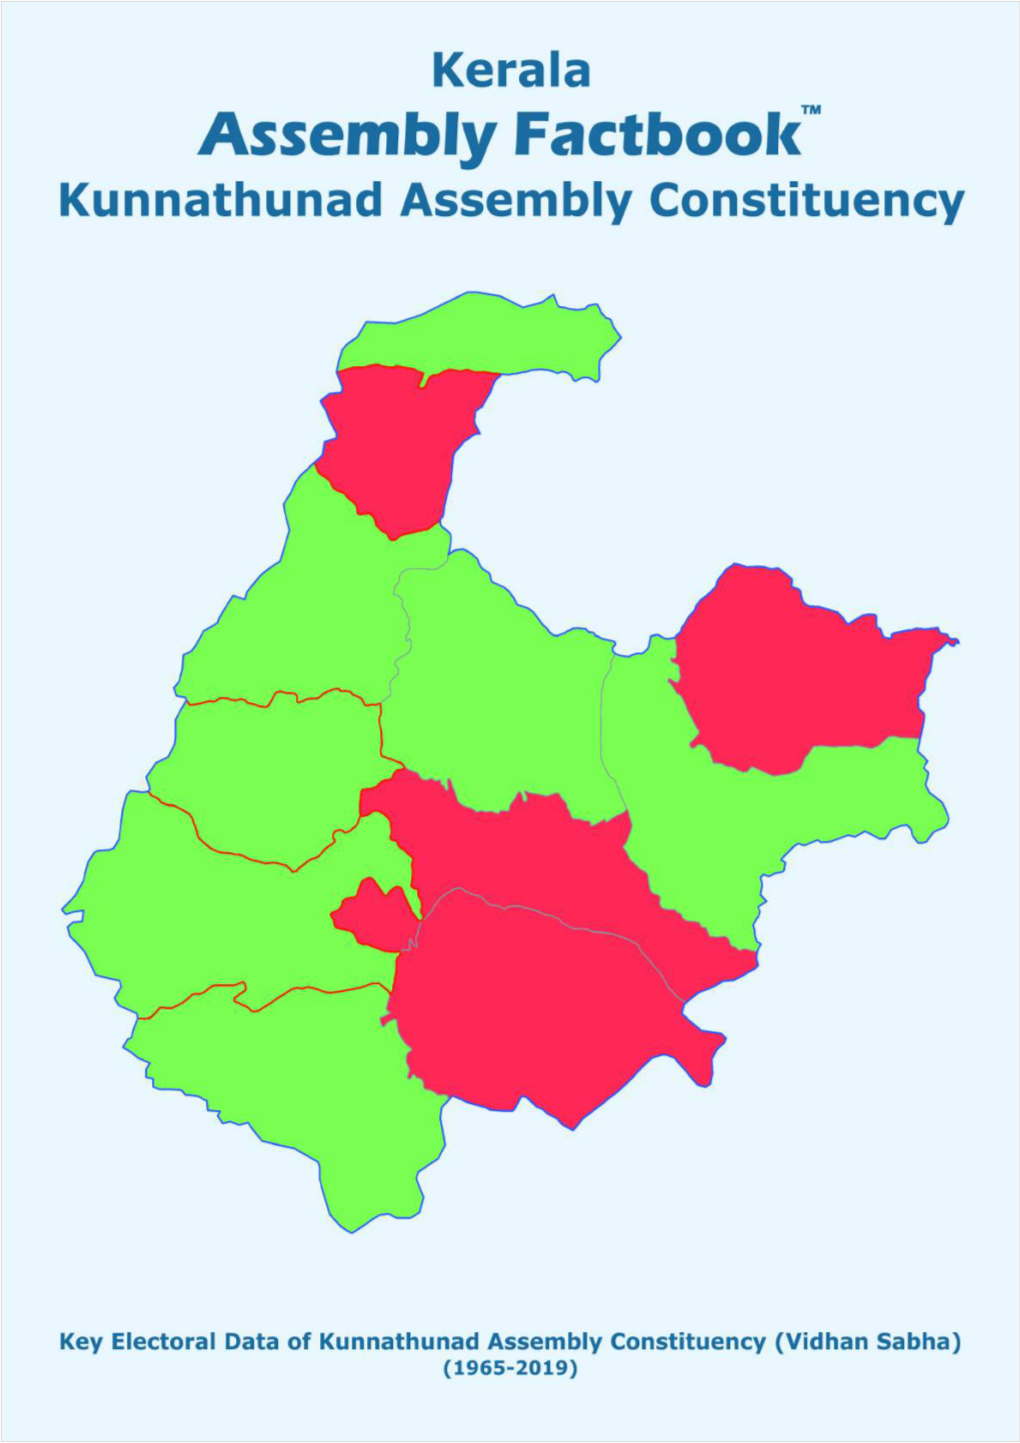 Kunnathunad Assembly Kerala Factbook